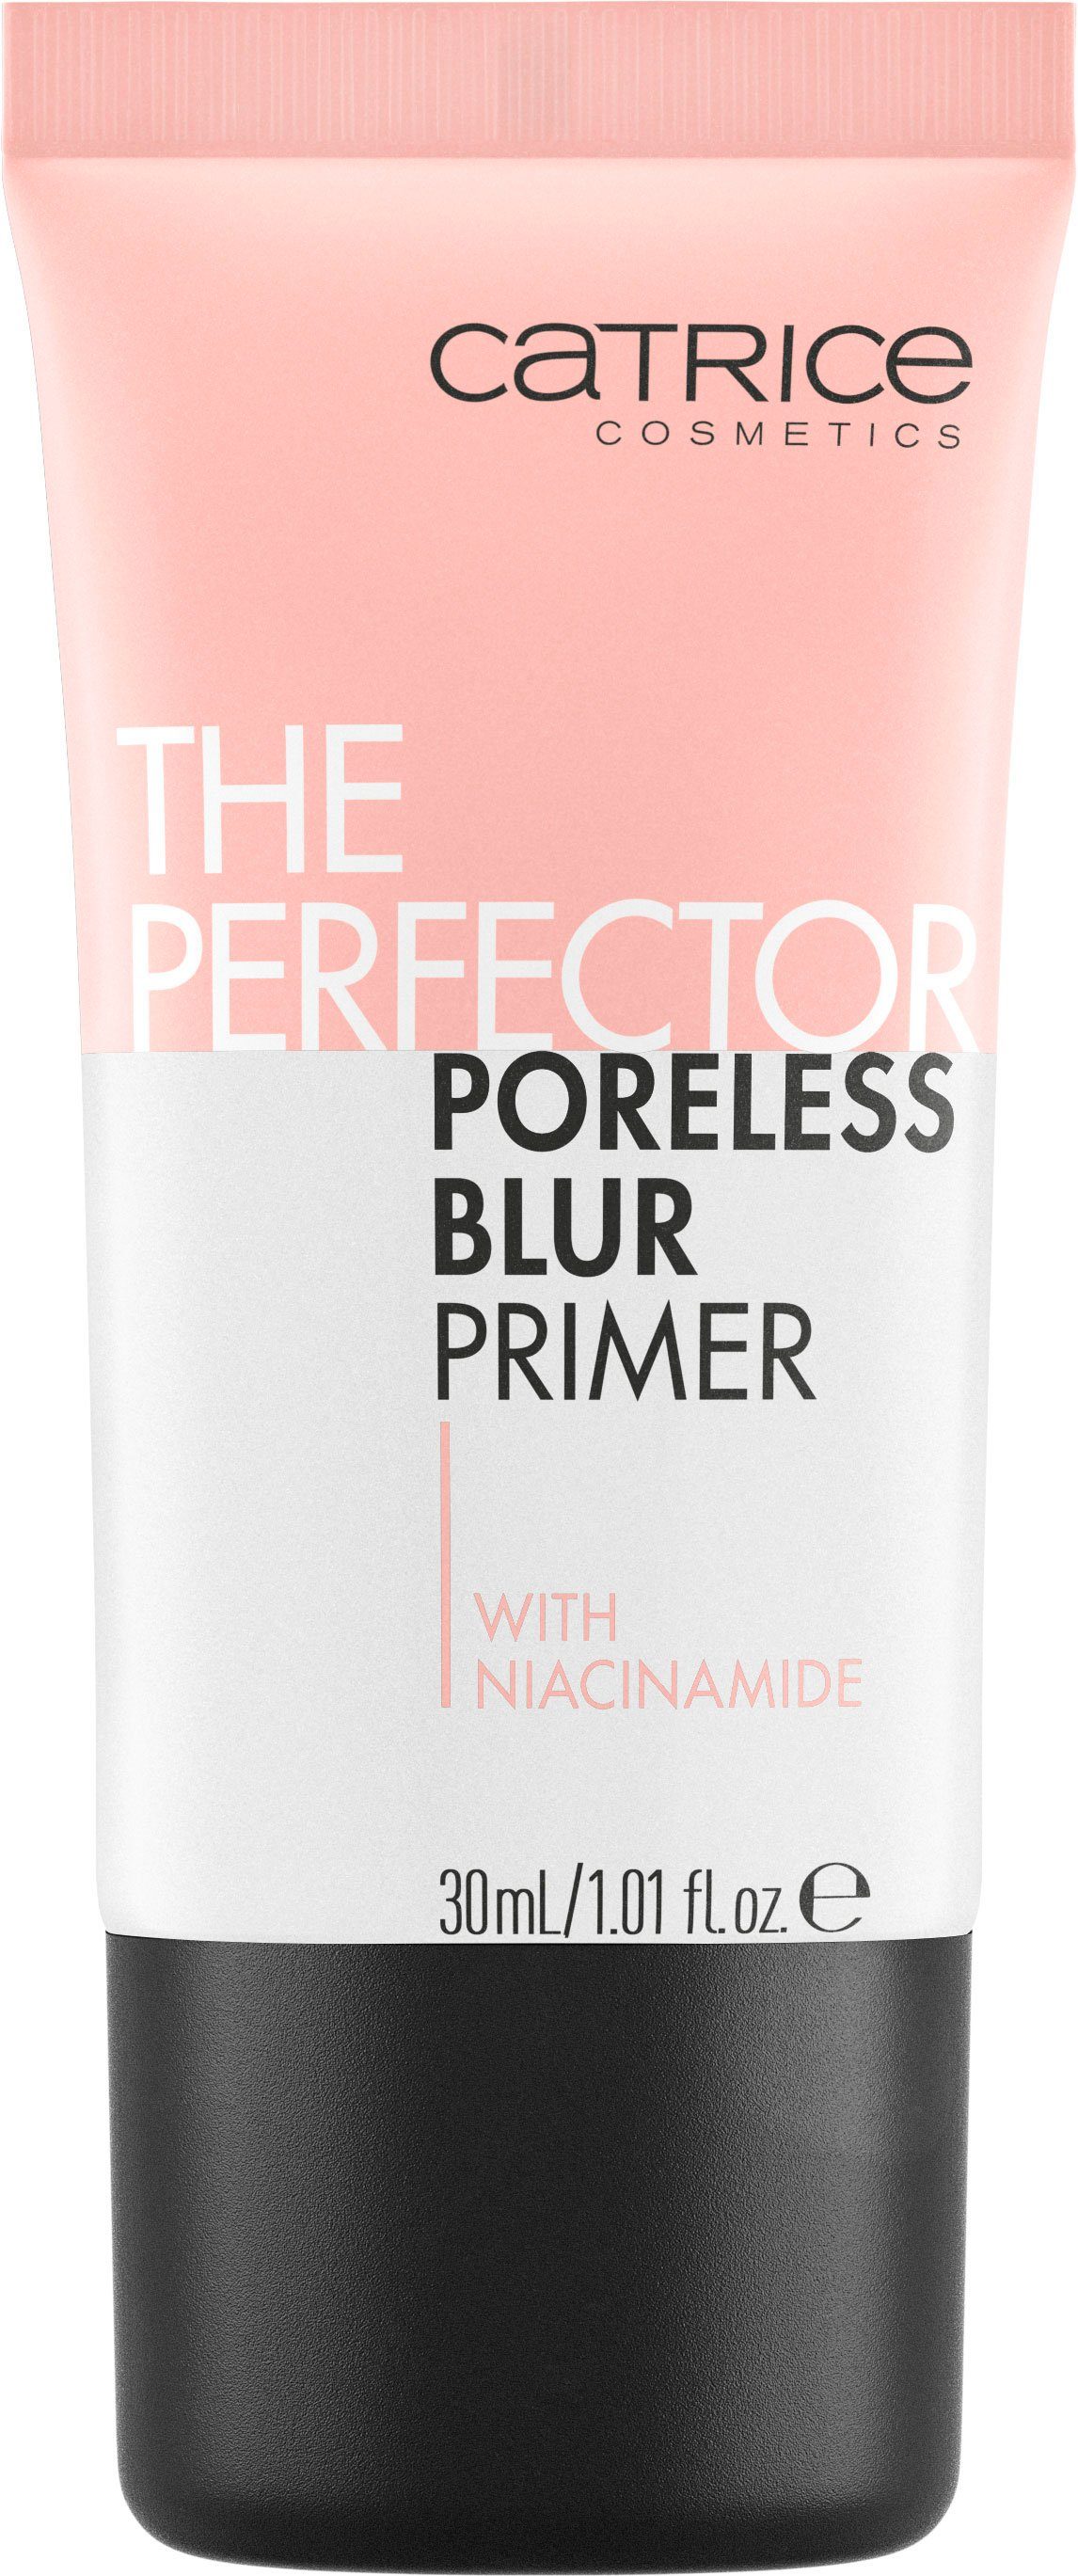 Primer Perfector Catrice 3-tlg. Primer, The Blur Poreless